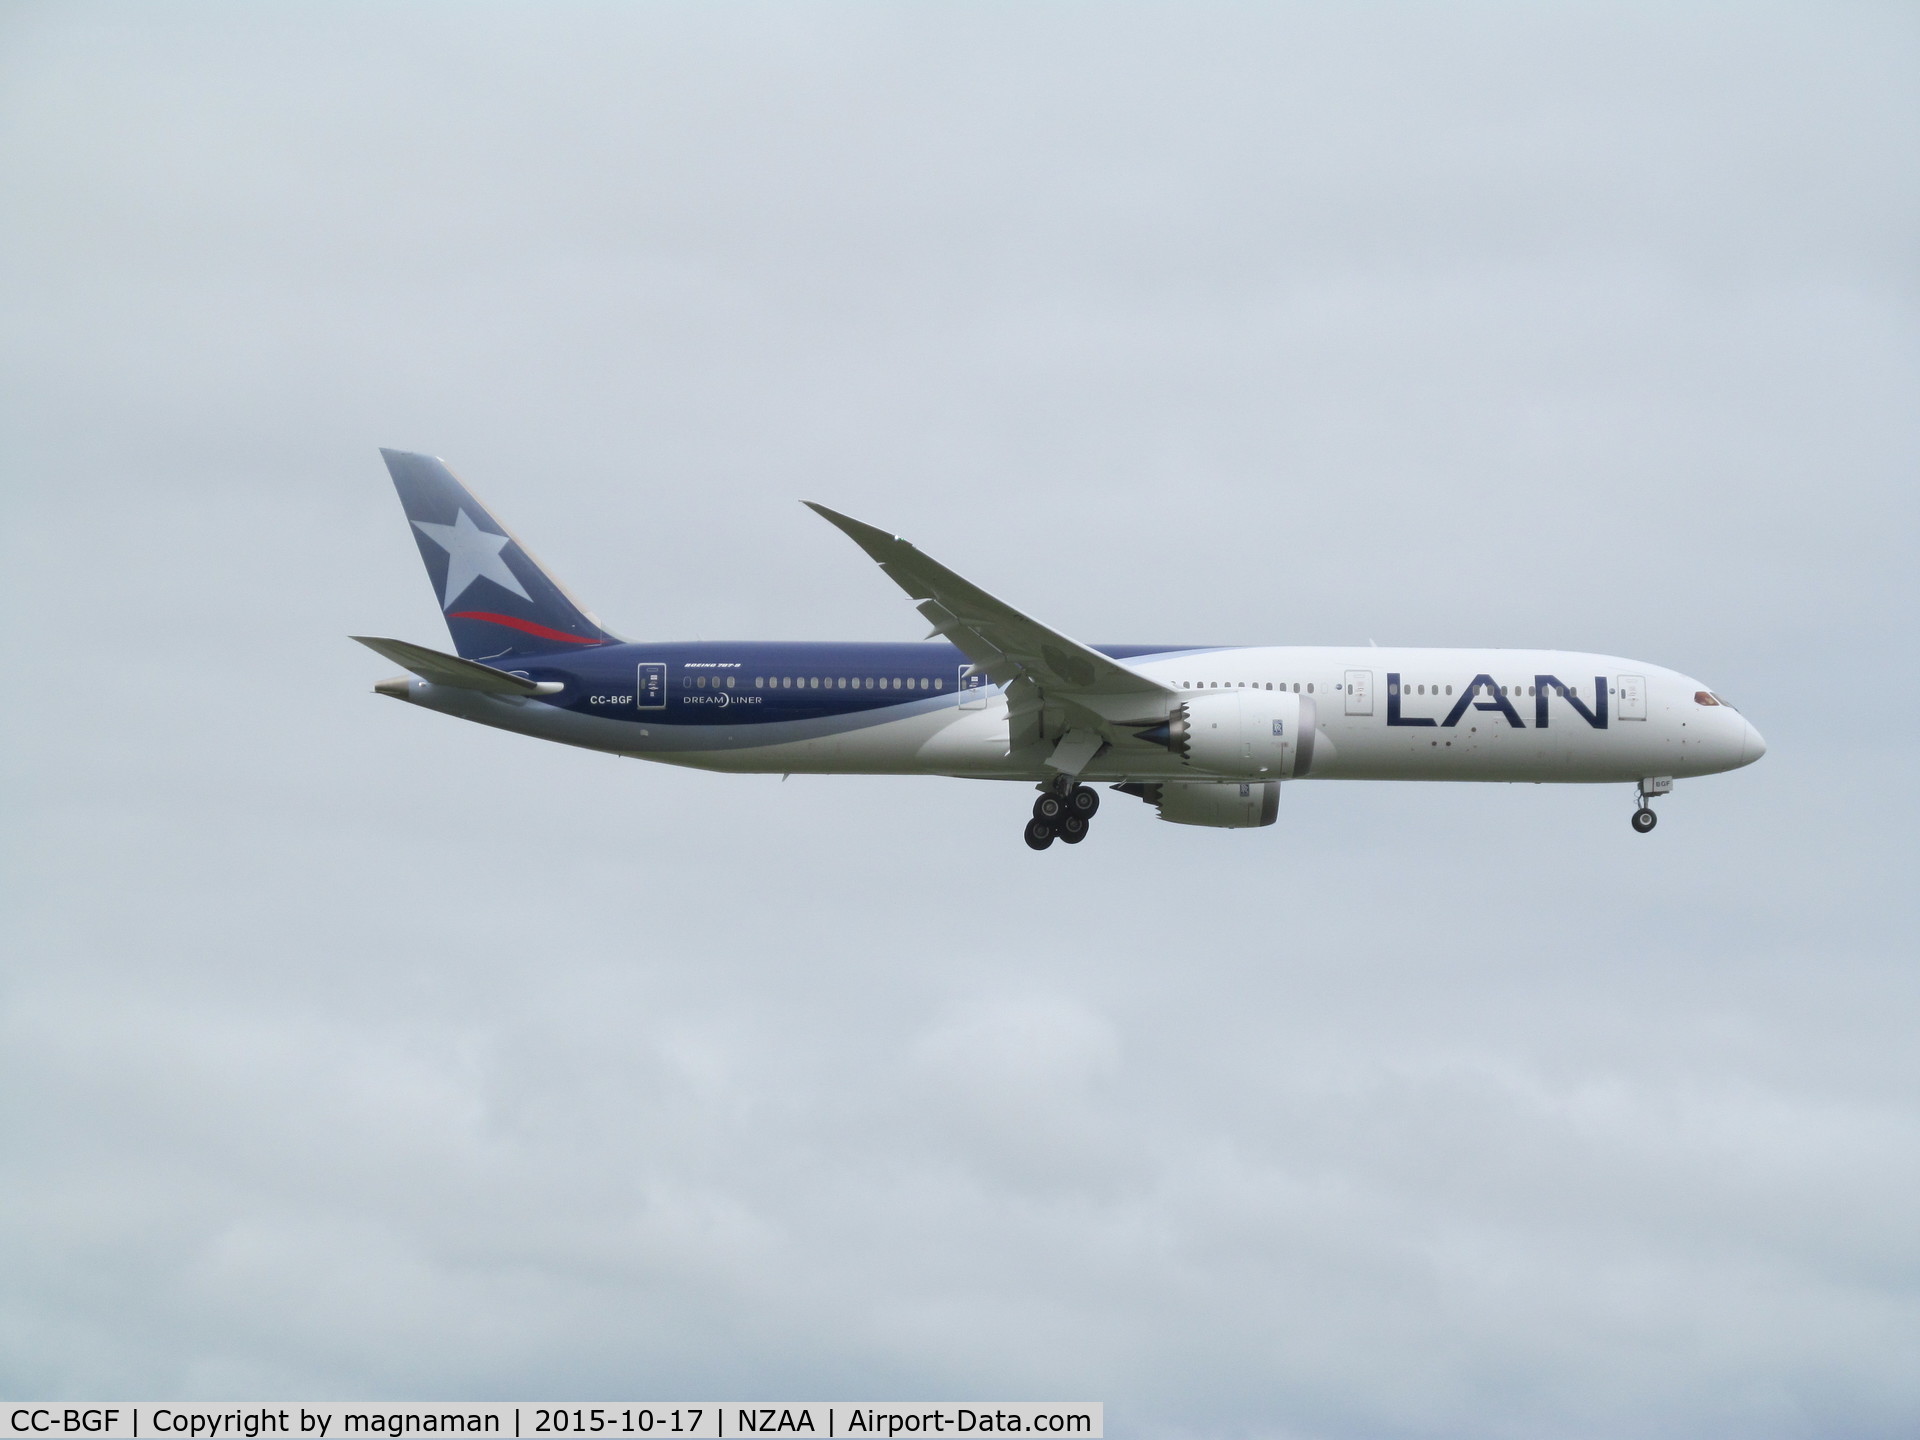 CC-BGF, 2015 Boeing 787-9 Dreamliner Dreamliner C/N 38479, Landing at AKL on its first day of NZ visits.